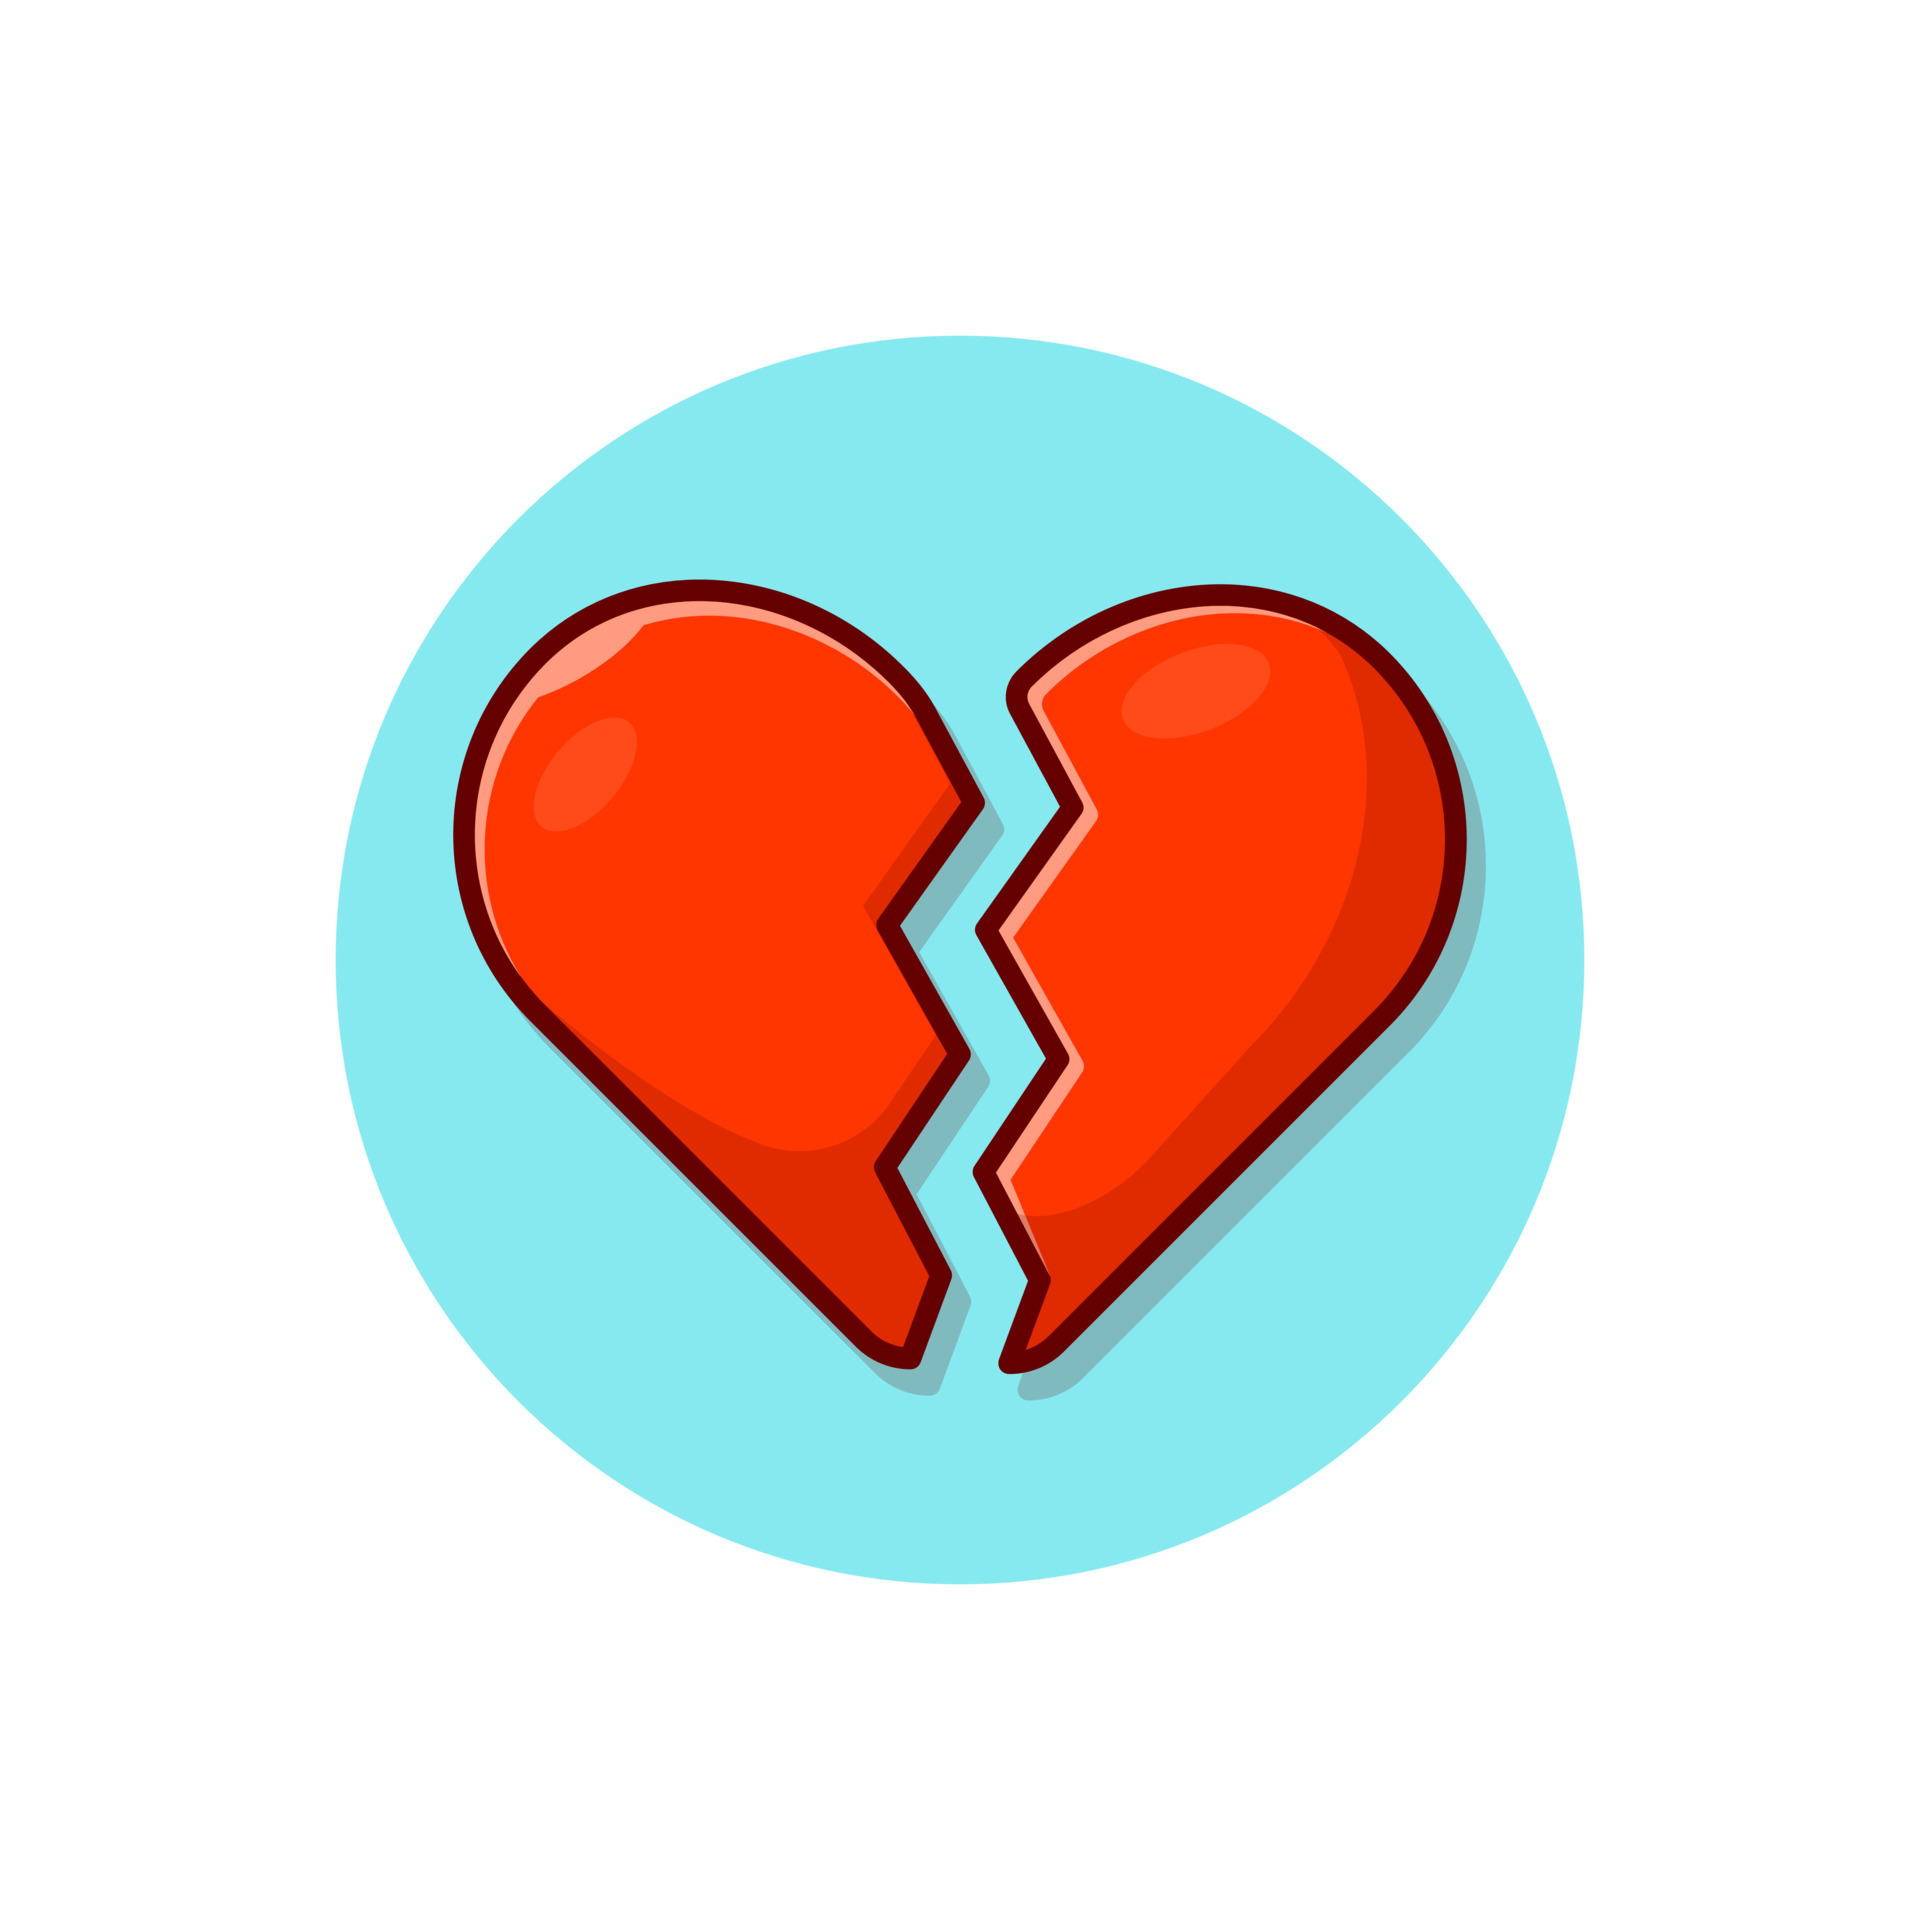 Broken Heart Love Cartoon Vector Icon Illustration. Sign Object Icon  Concept Isolated Premium Vector. Flat Cartoon Style 10308193 Vector Art at  Vecteezy